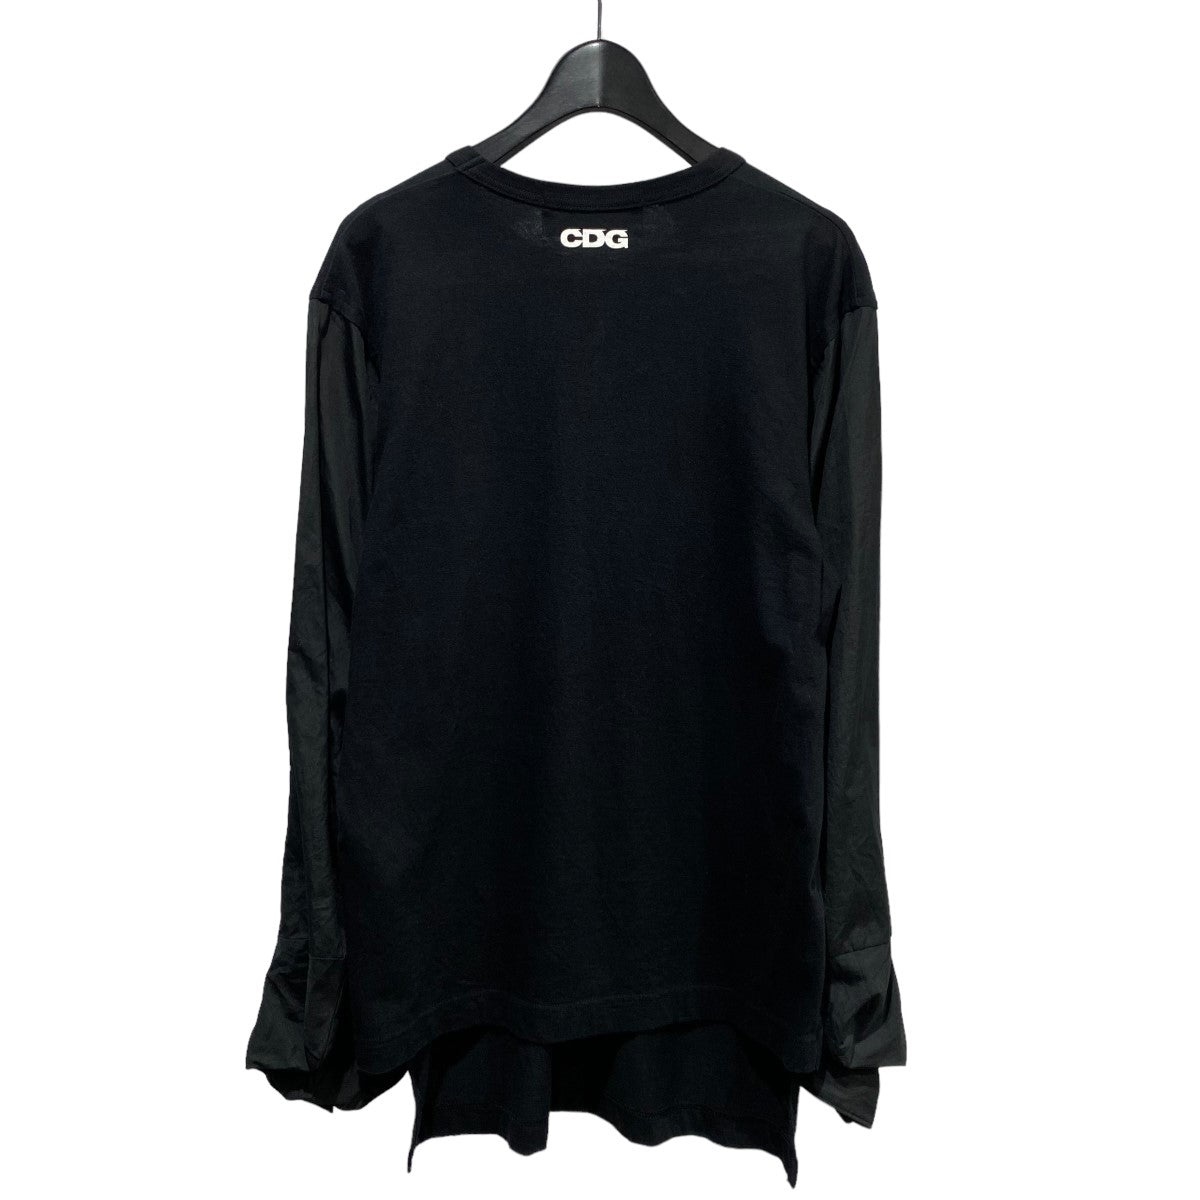 CDG(コムデギャルソン) 袖切替 袖口変形デザインカットソーシャツ SZ 